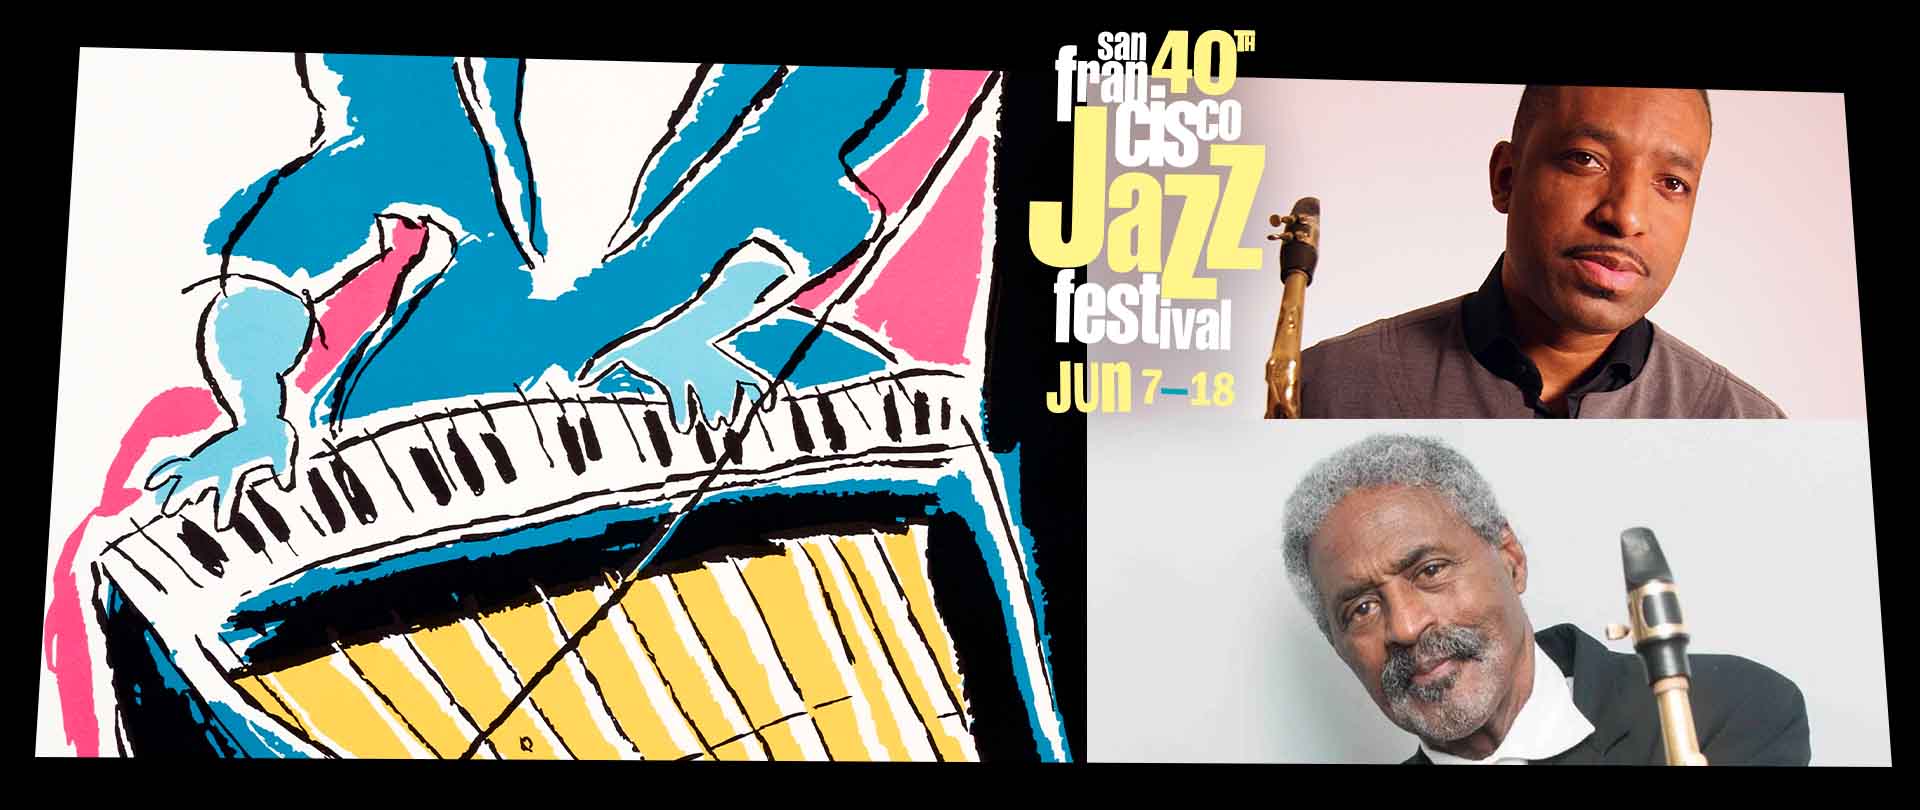 Donald Harrison Jr. & Charles McPherson with the 40th San Francisco Jazz Festival logo 